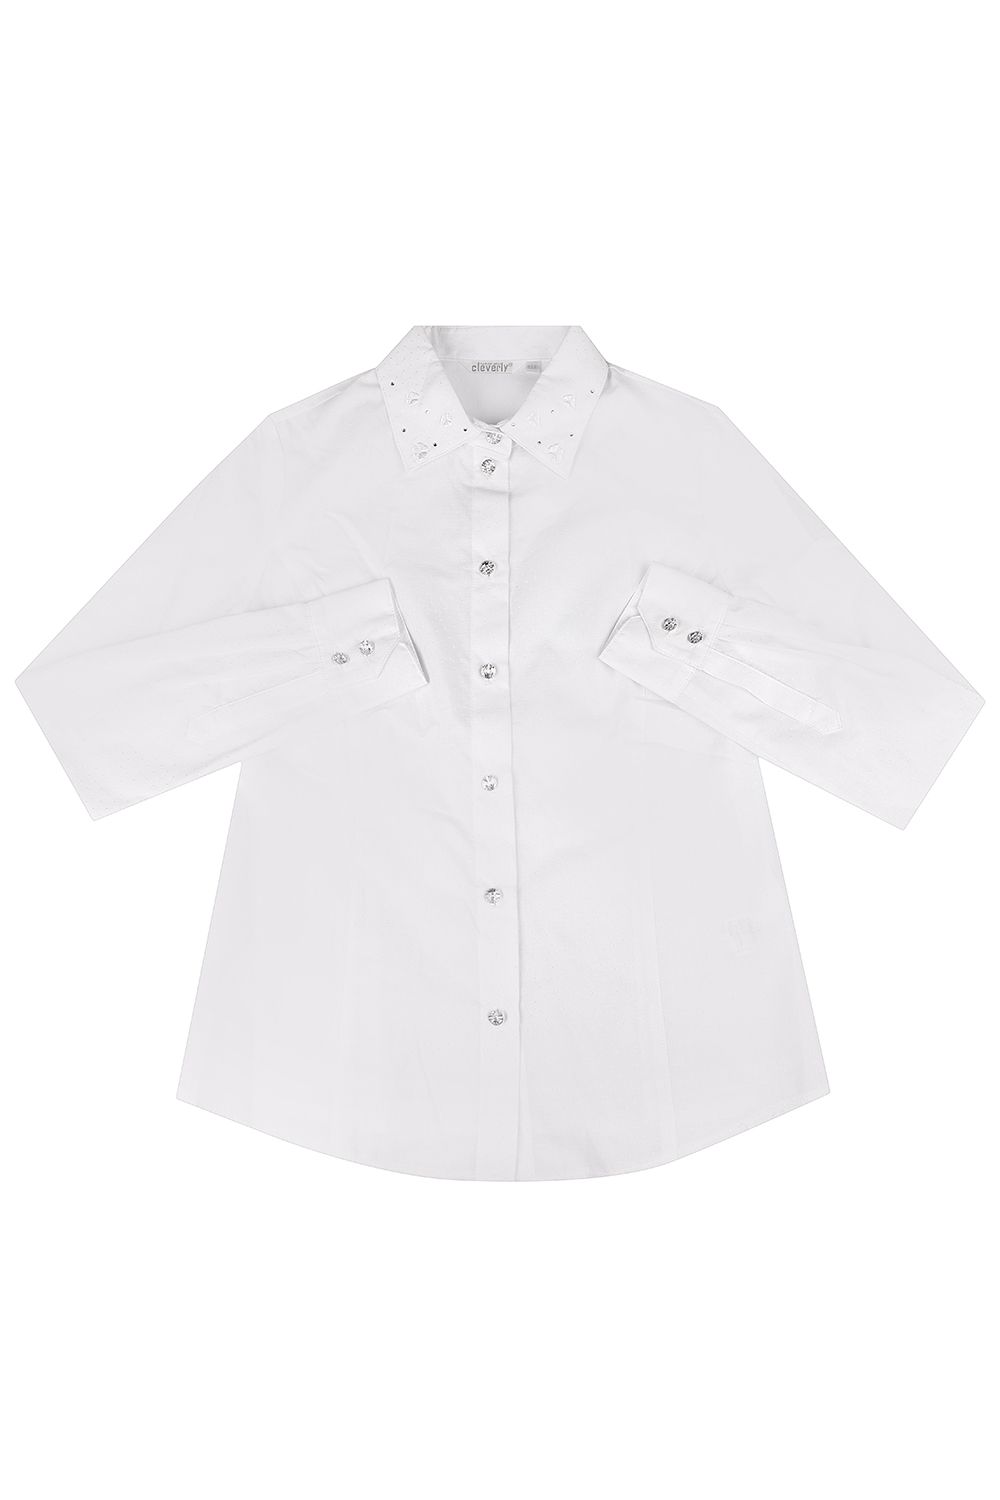 Блуза Cleverly, размер 128, цвет белый S7CB02-0431/0431 - фото 1